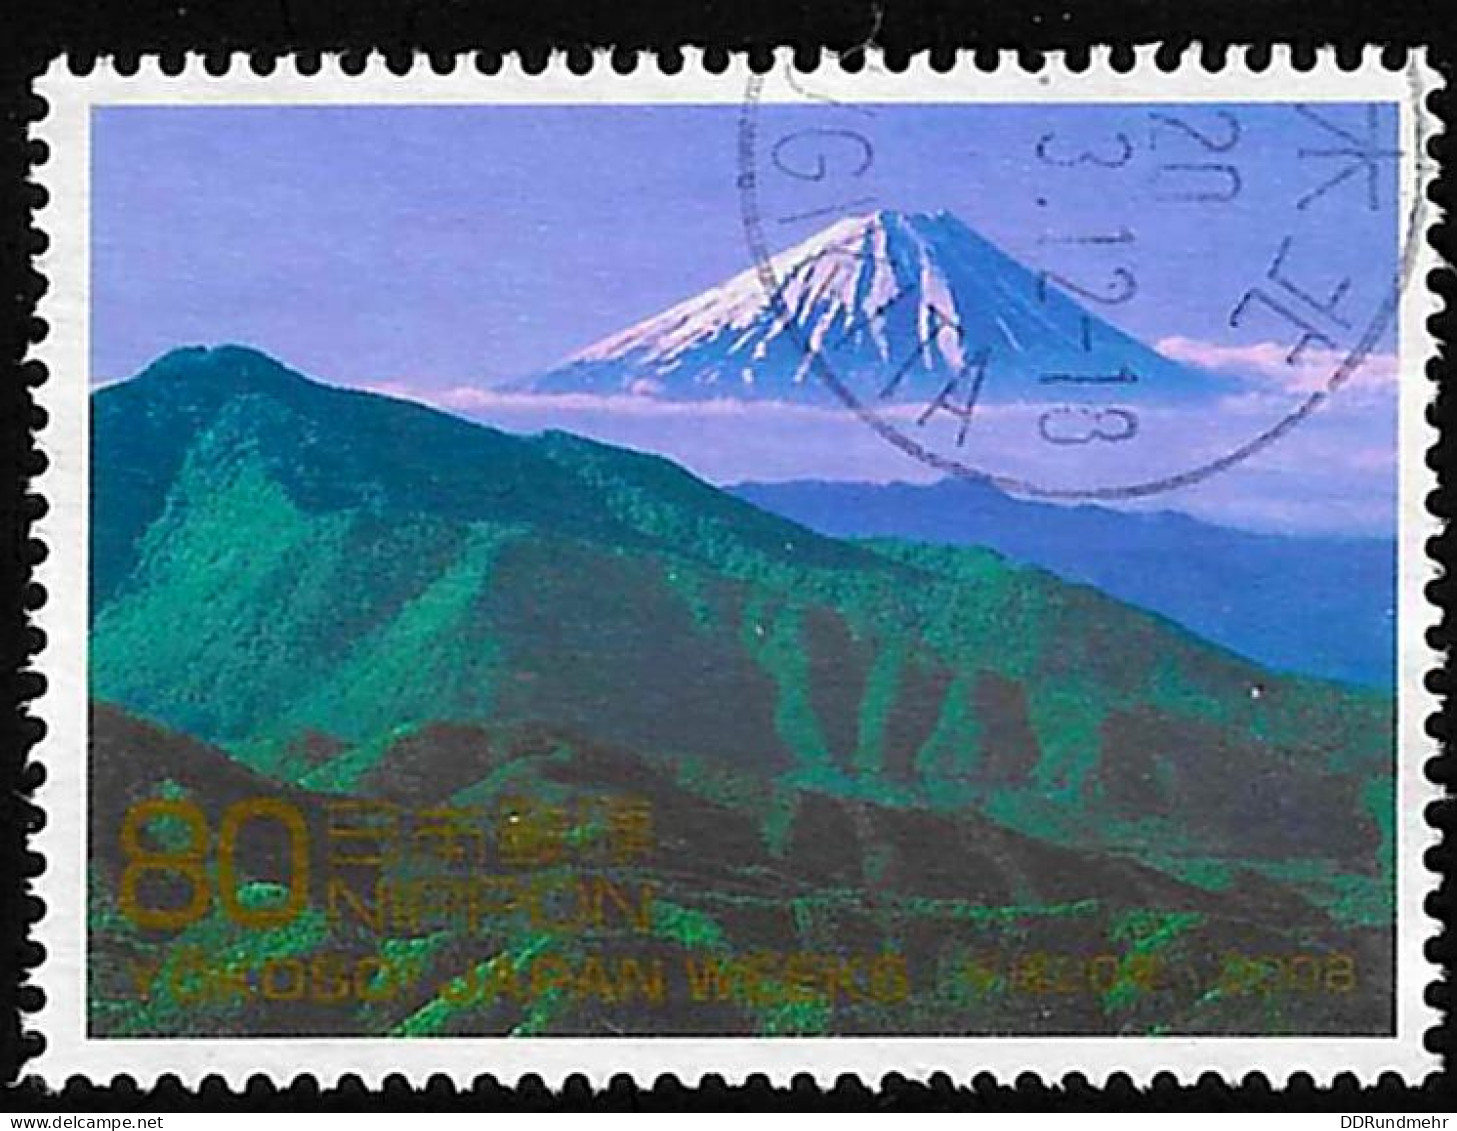 2008 Fuji   Michel JP 4447 Stamp Number JP 3014c Yvert Et Tellier JP 4274 Stanley Gibbons JP 3684 Used - Usati